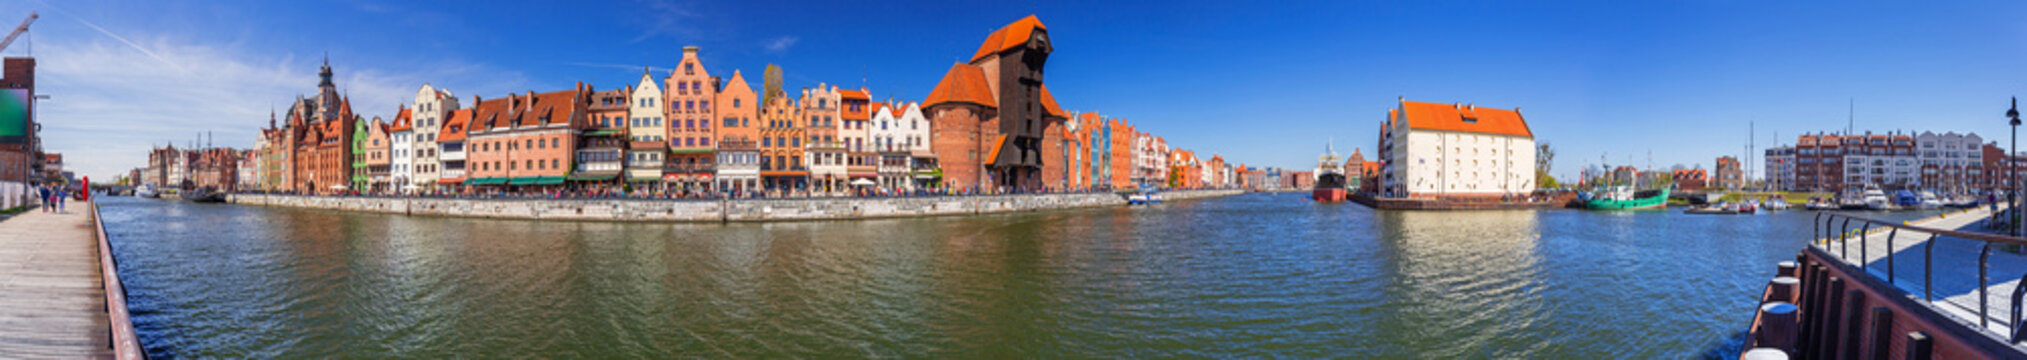 Old town of Gdansk panorama at Motlawa river, Poland